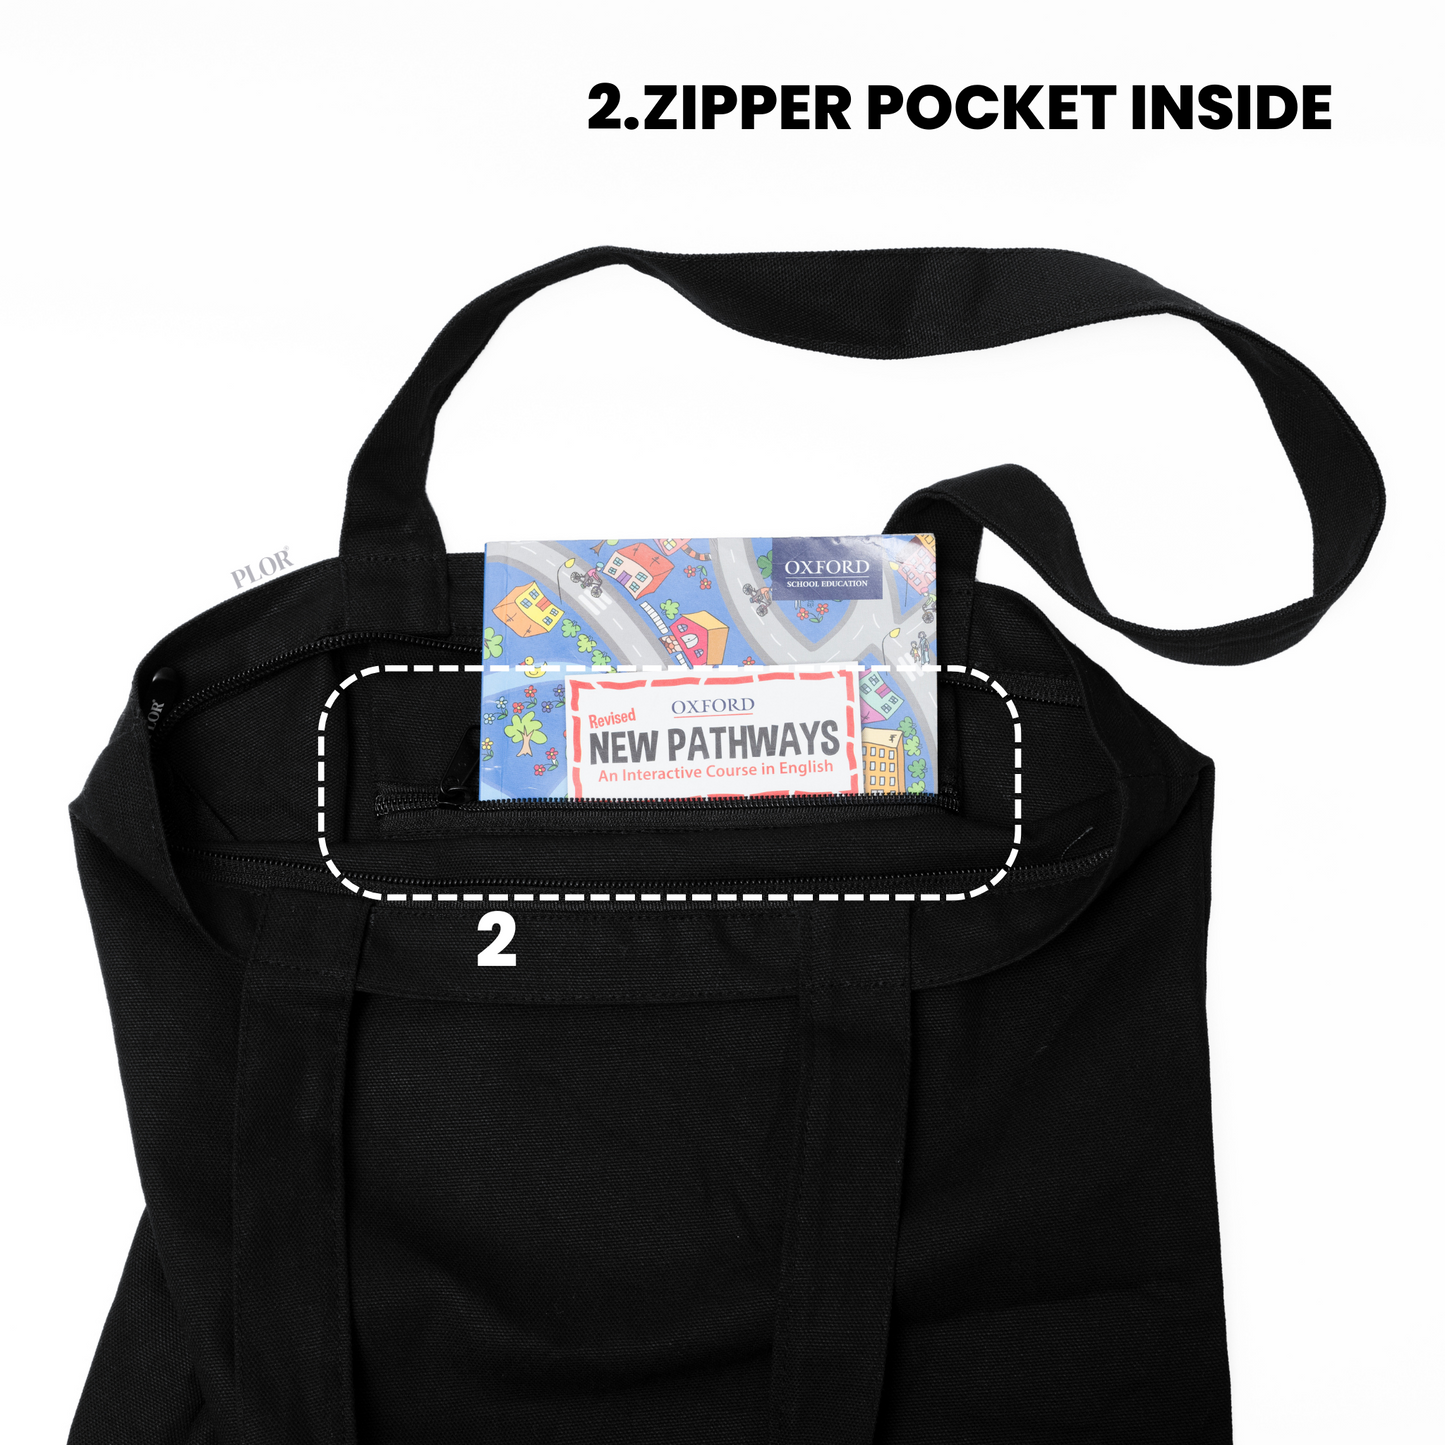 Basic Black Zipper Tote Bag 03